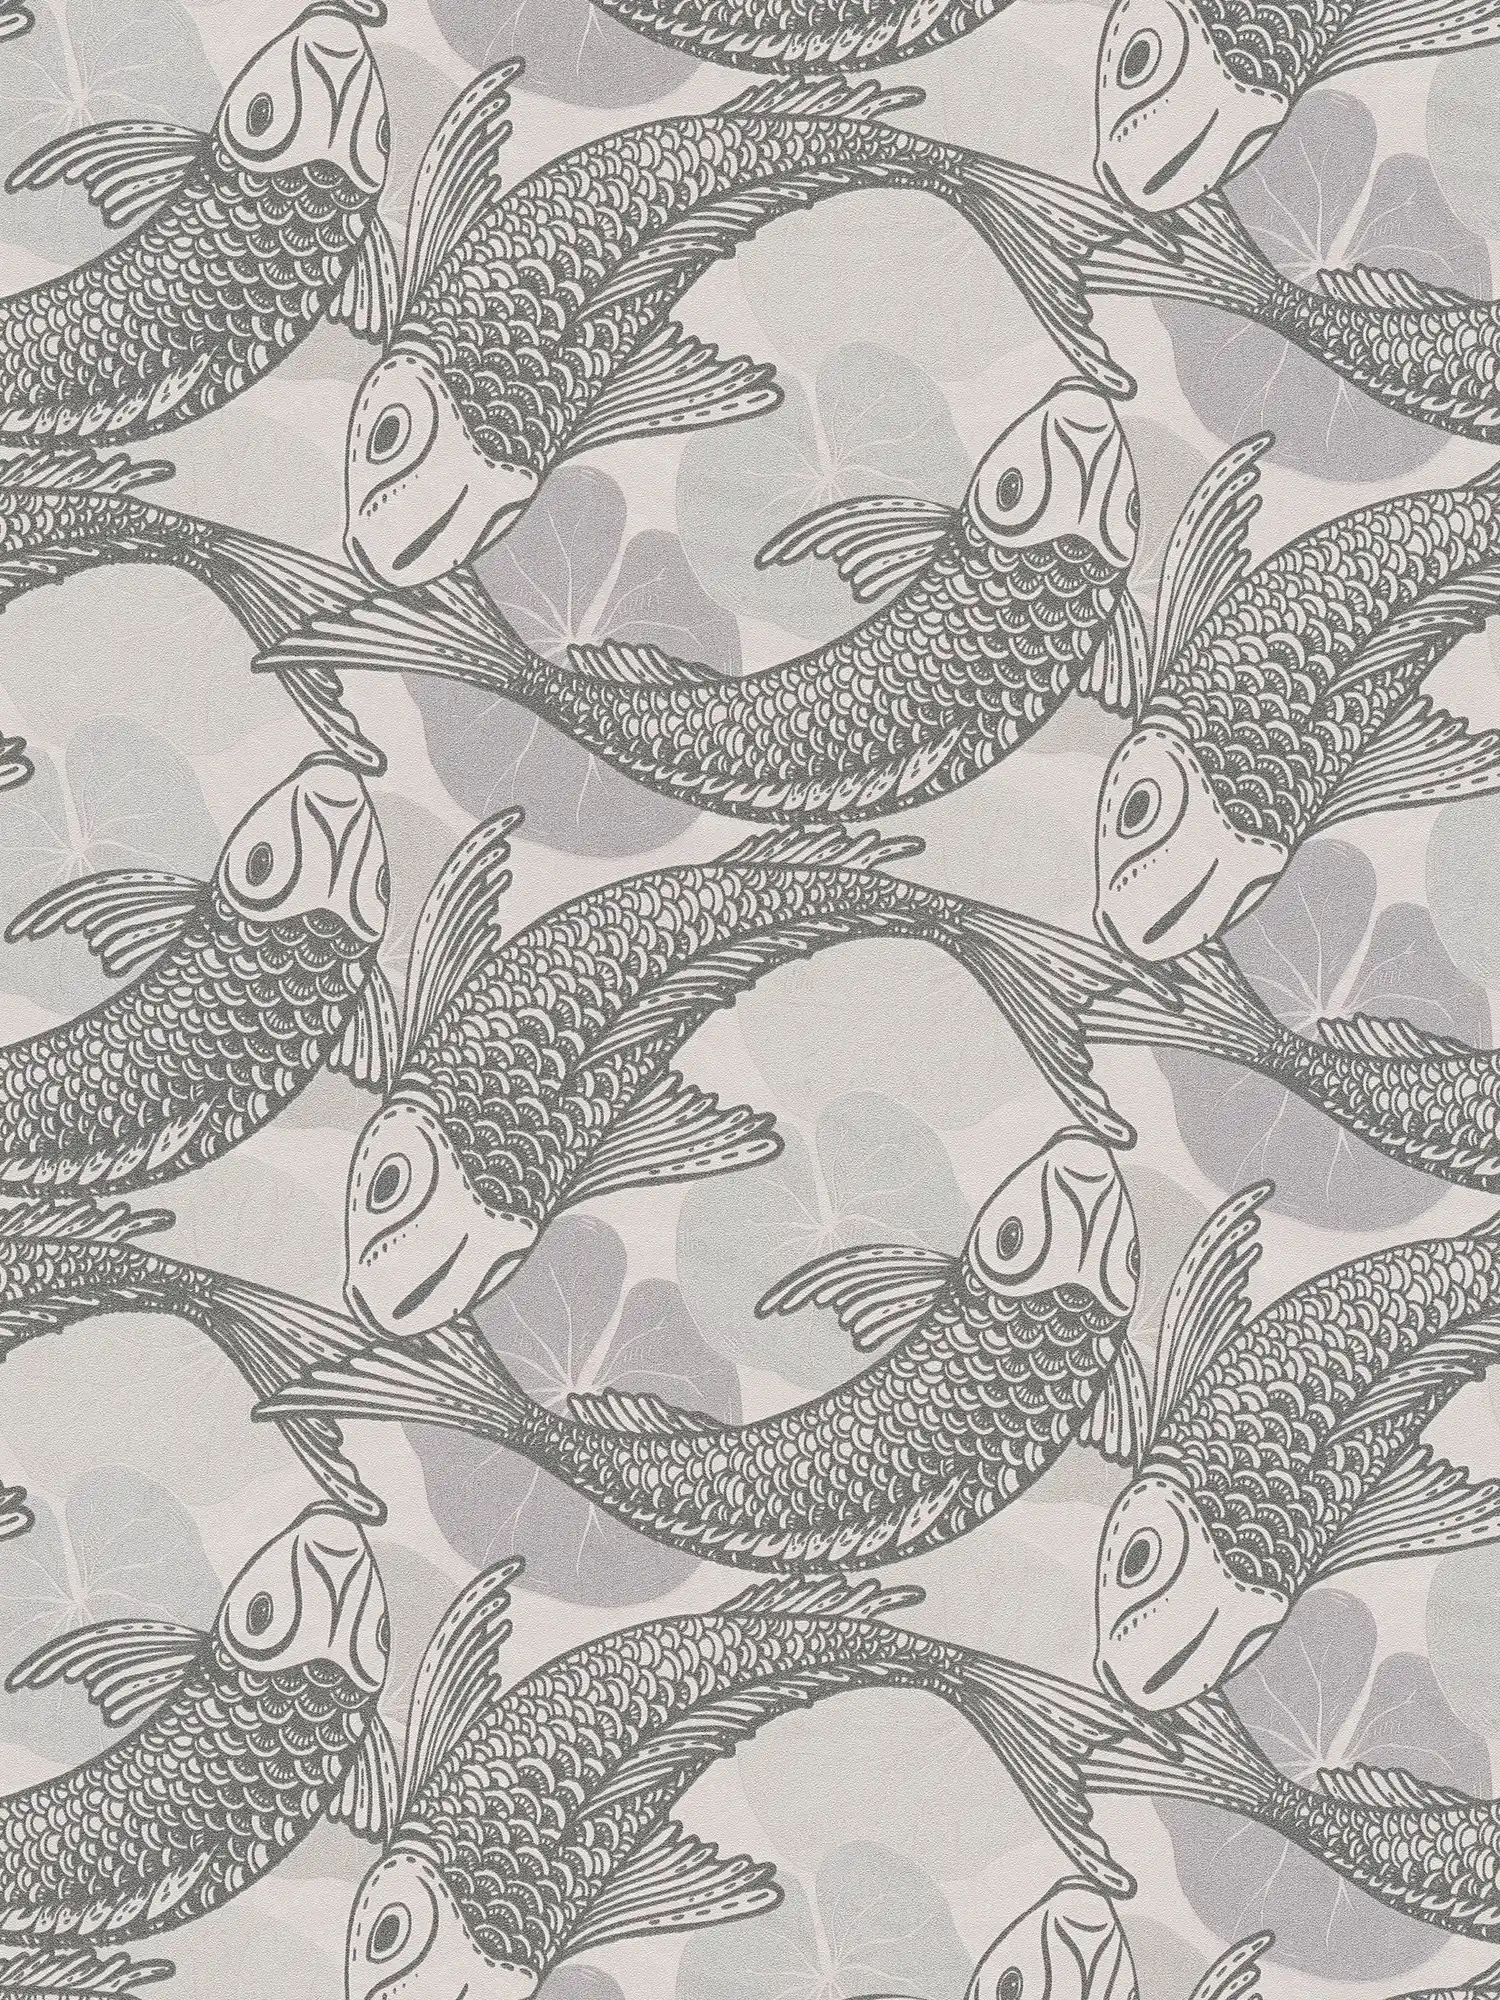 Wallpaper Koi design in Asia style with metallic effect - beige, grey, metallic
